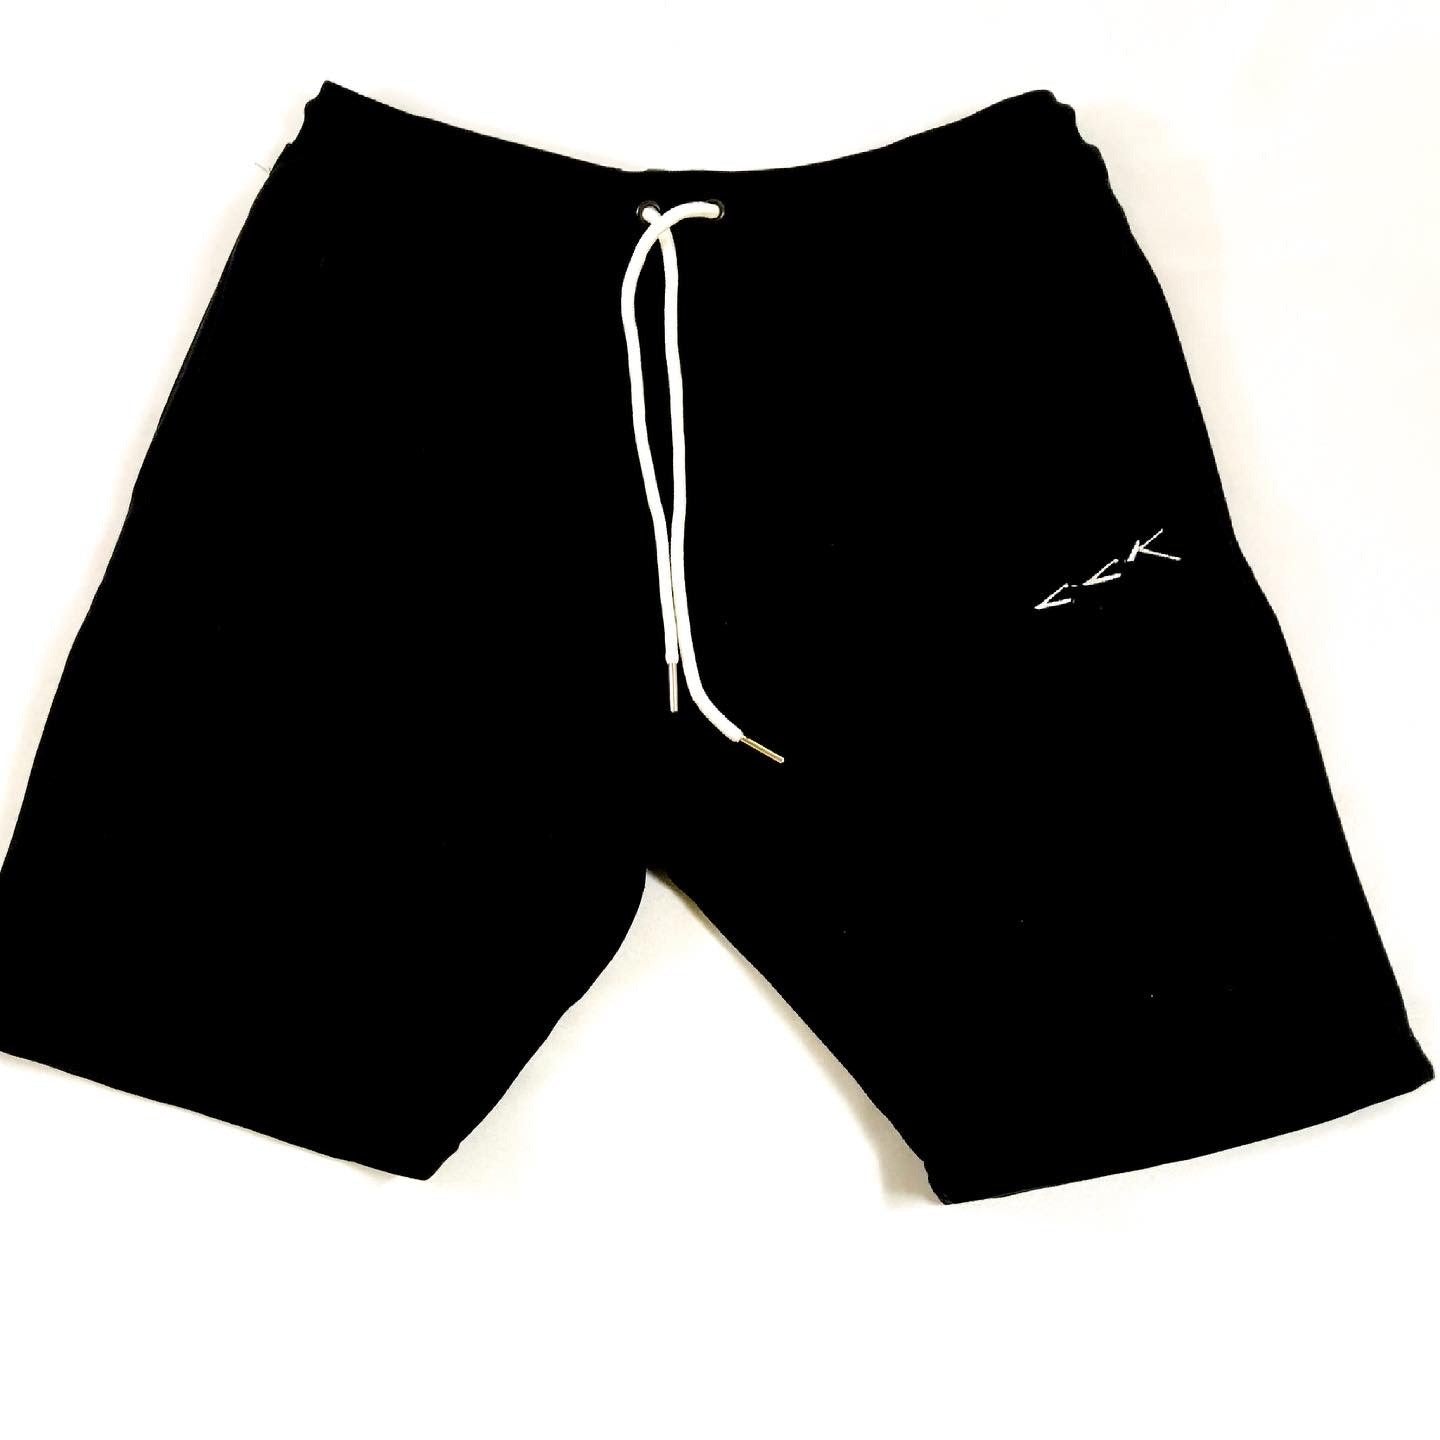 Black Cold City Shorts